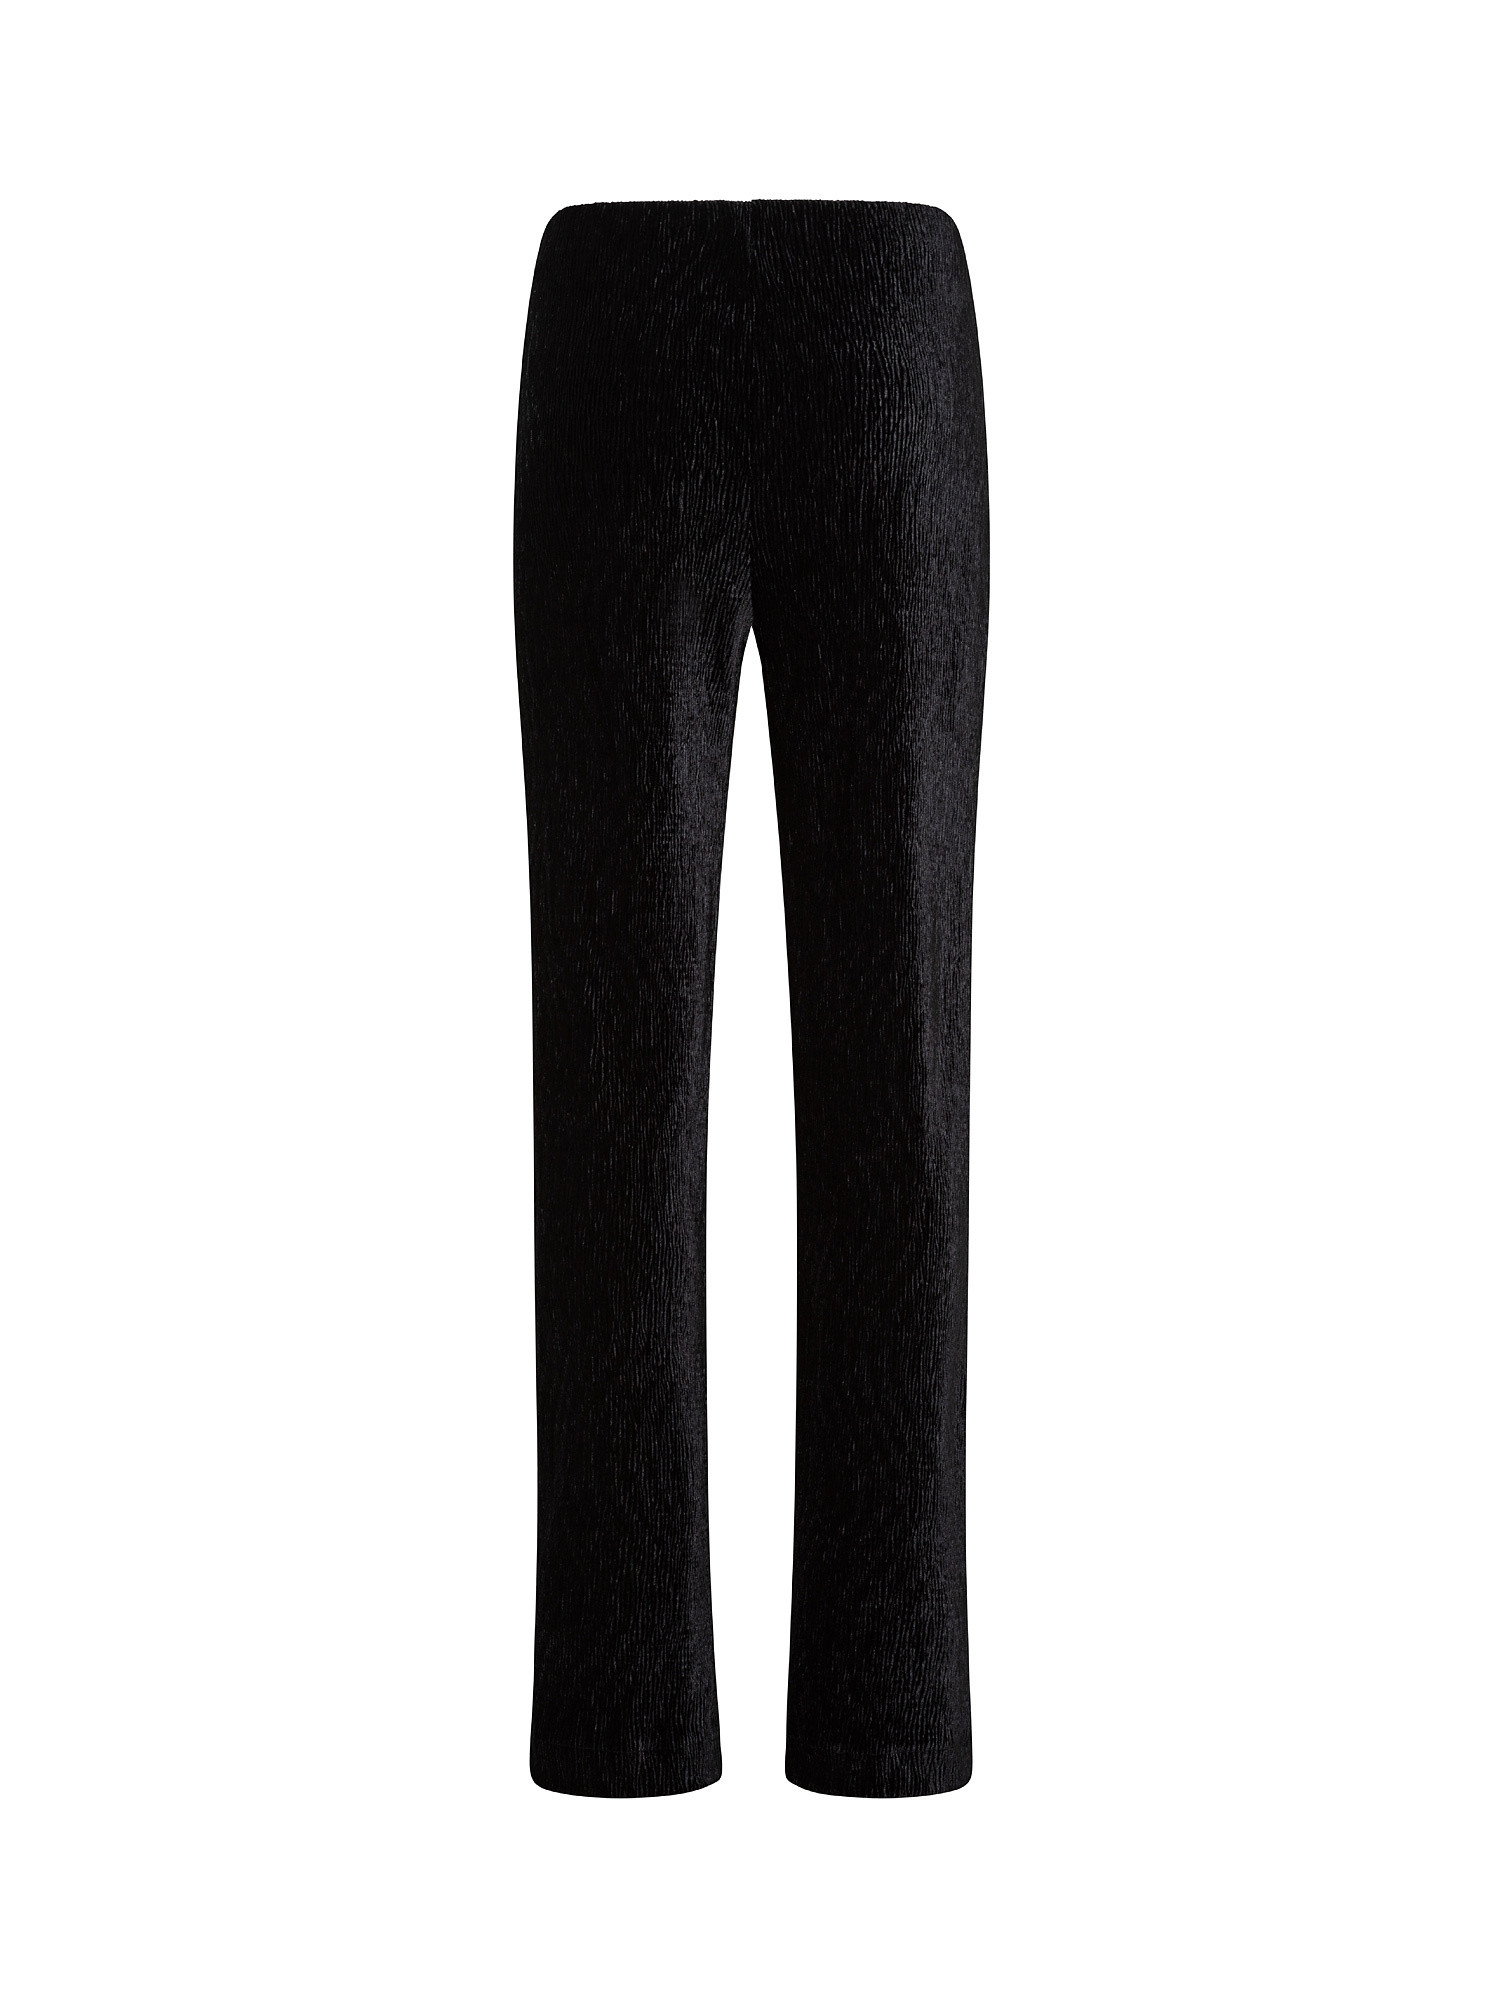 Elegant trousers, Black, large image number 1